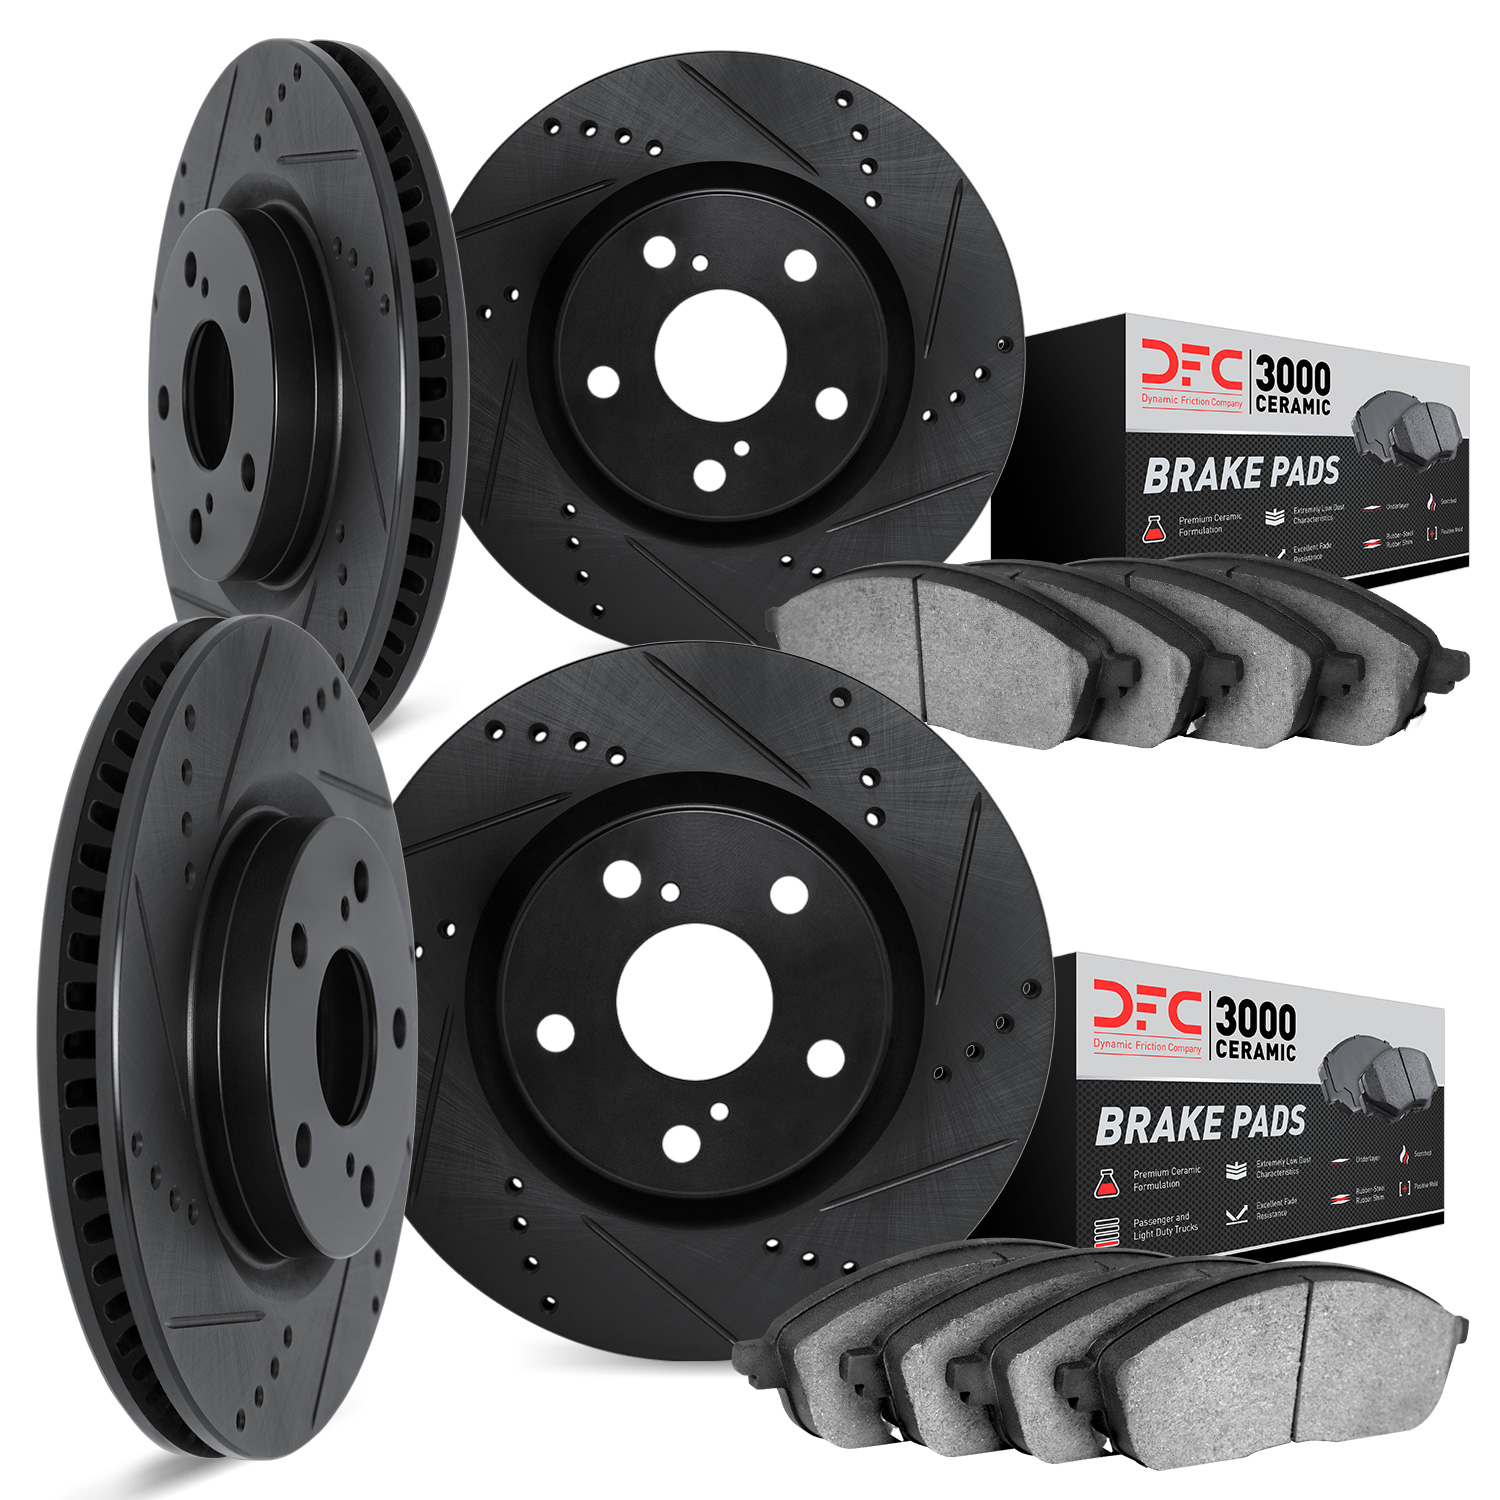 8304-54117 Drilled/Slotted Brake Rotors with 3000-Series Ceramic Brake Pads Kit [Black], 2015-2020 Ford/Lincoln/Mercury/Mazda, P